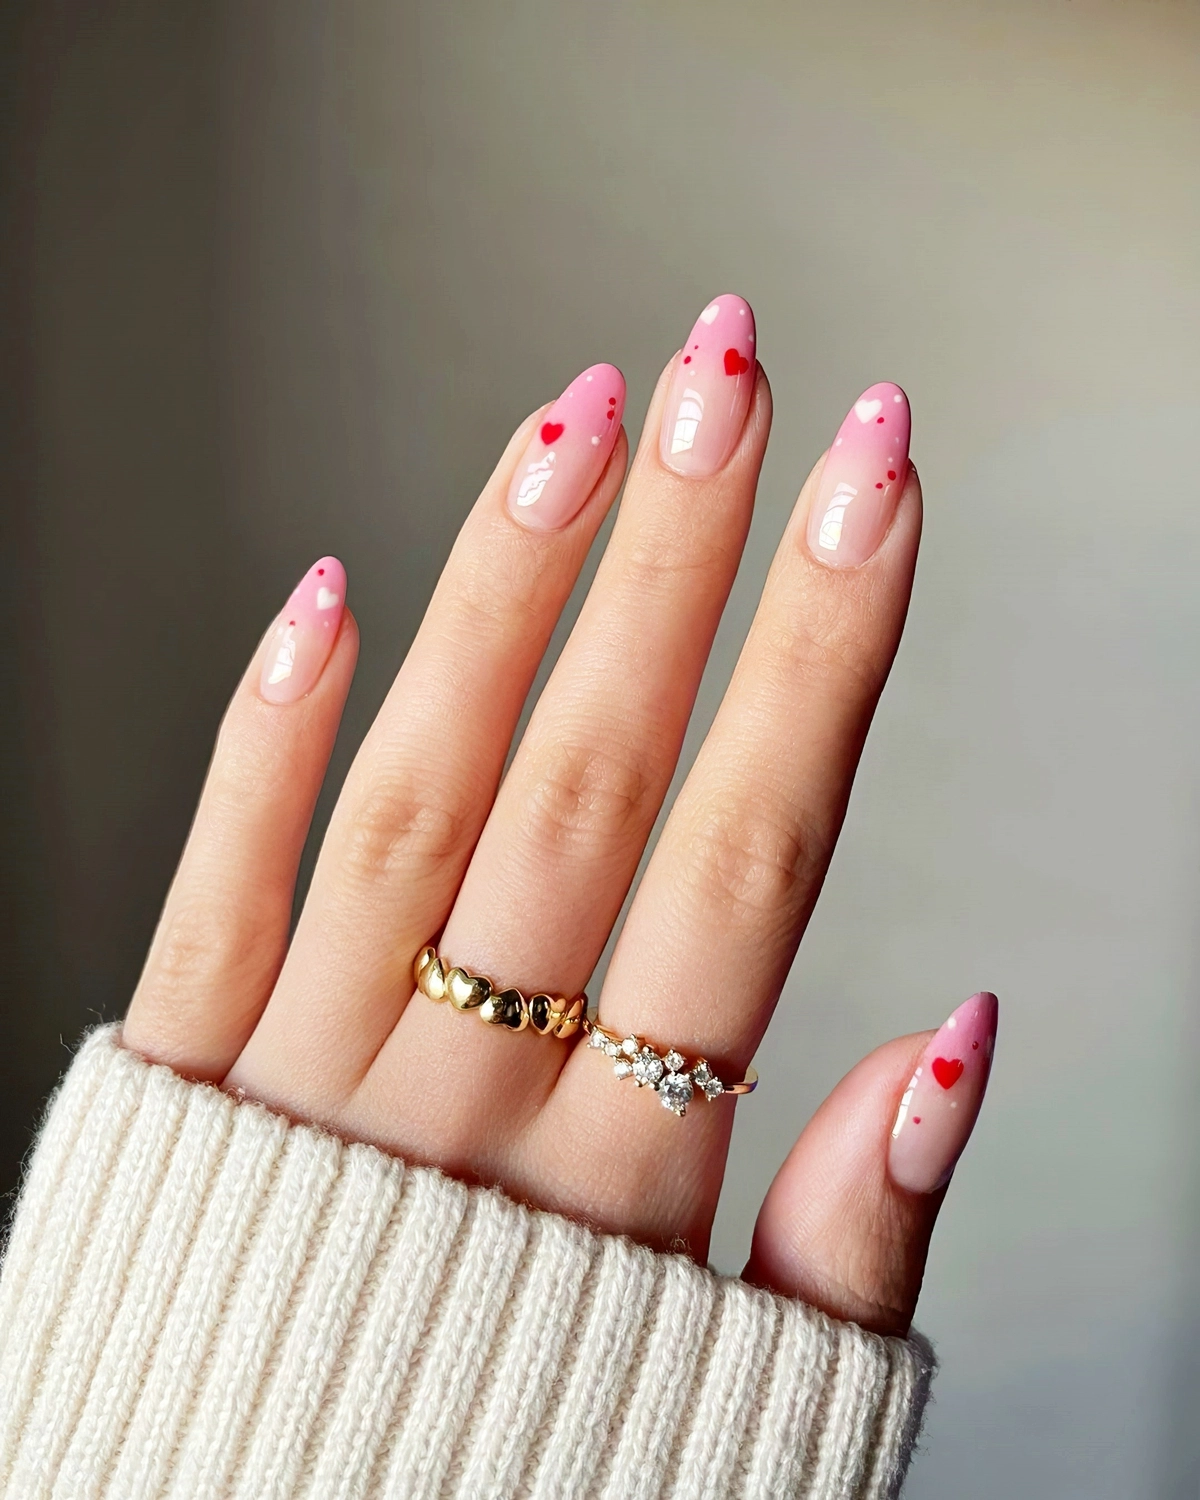 french nails lang rosa neegel mit herzen als motiv heluviee